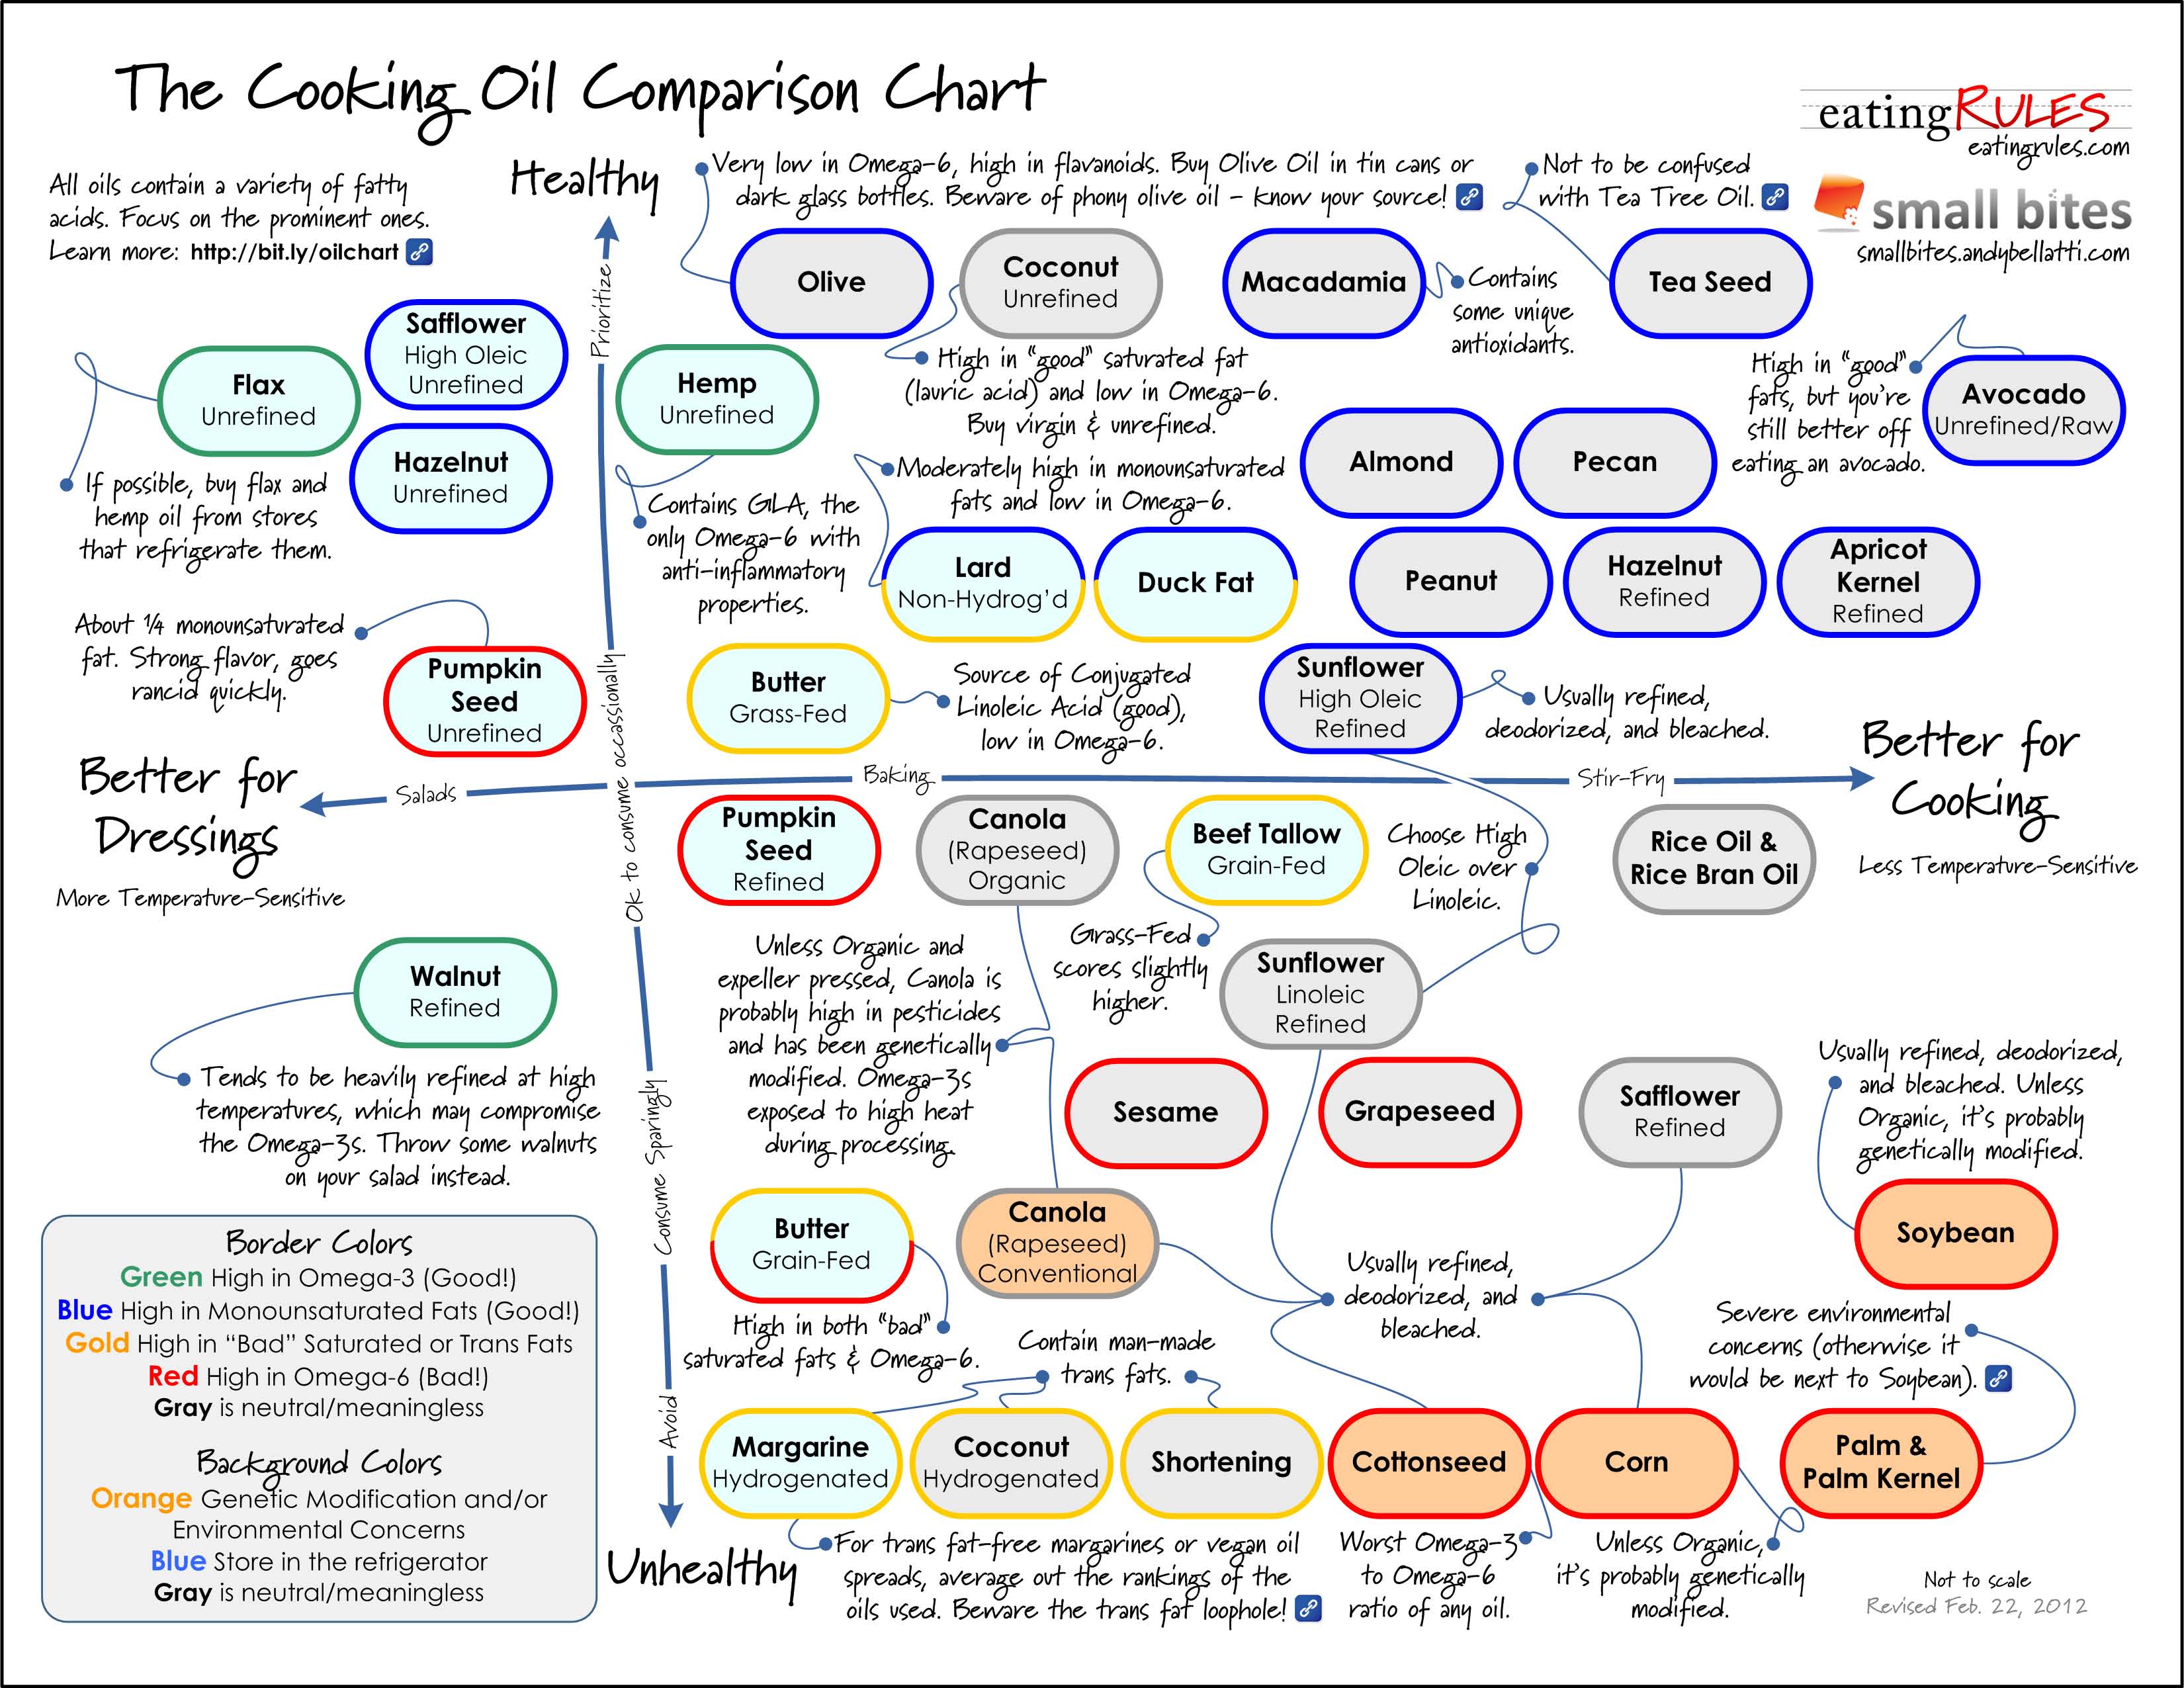 Cooking-Oil-Comparison-Chart_02-22-12